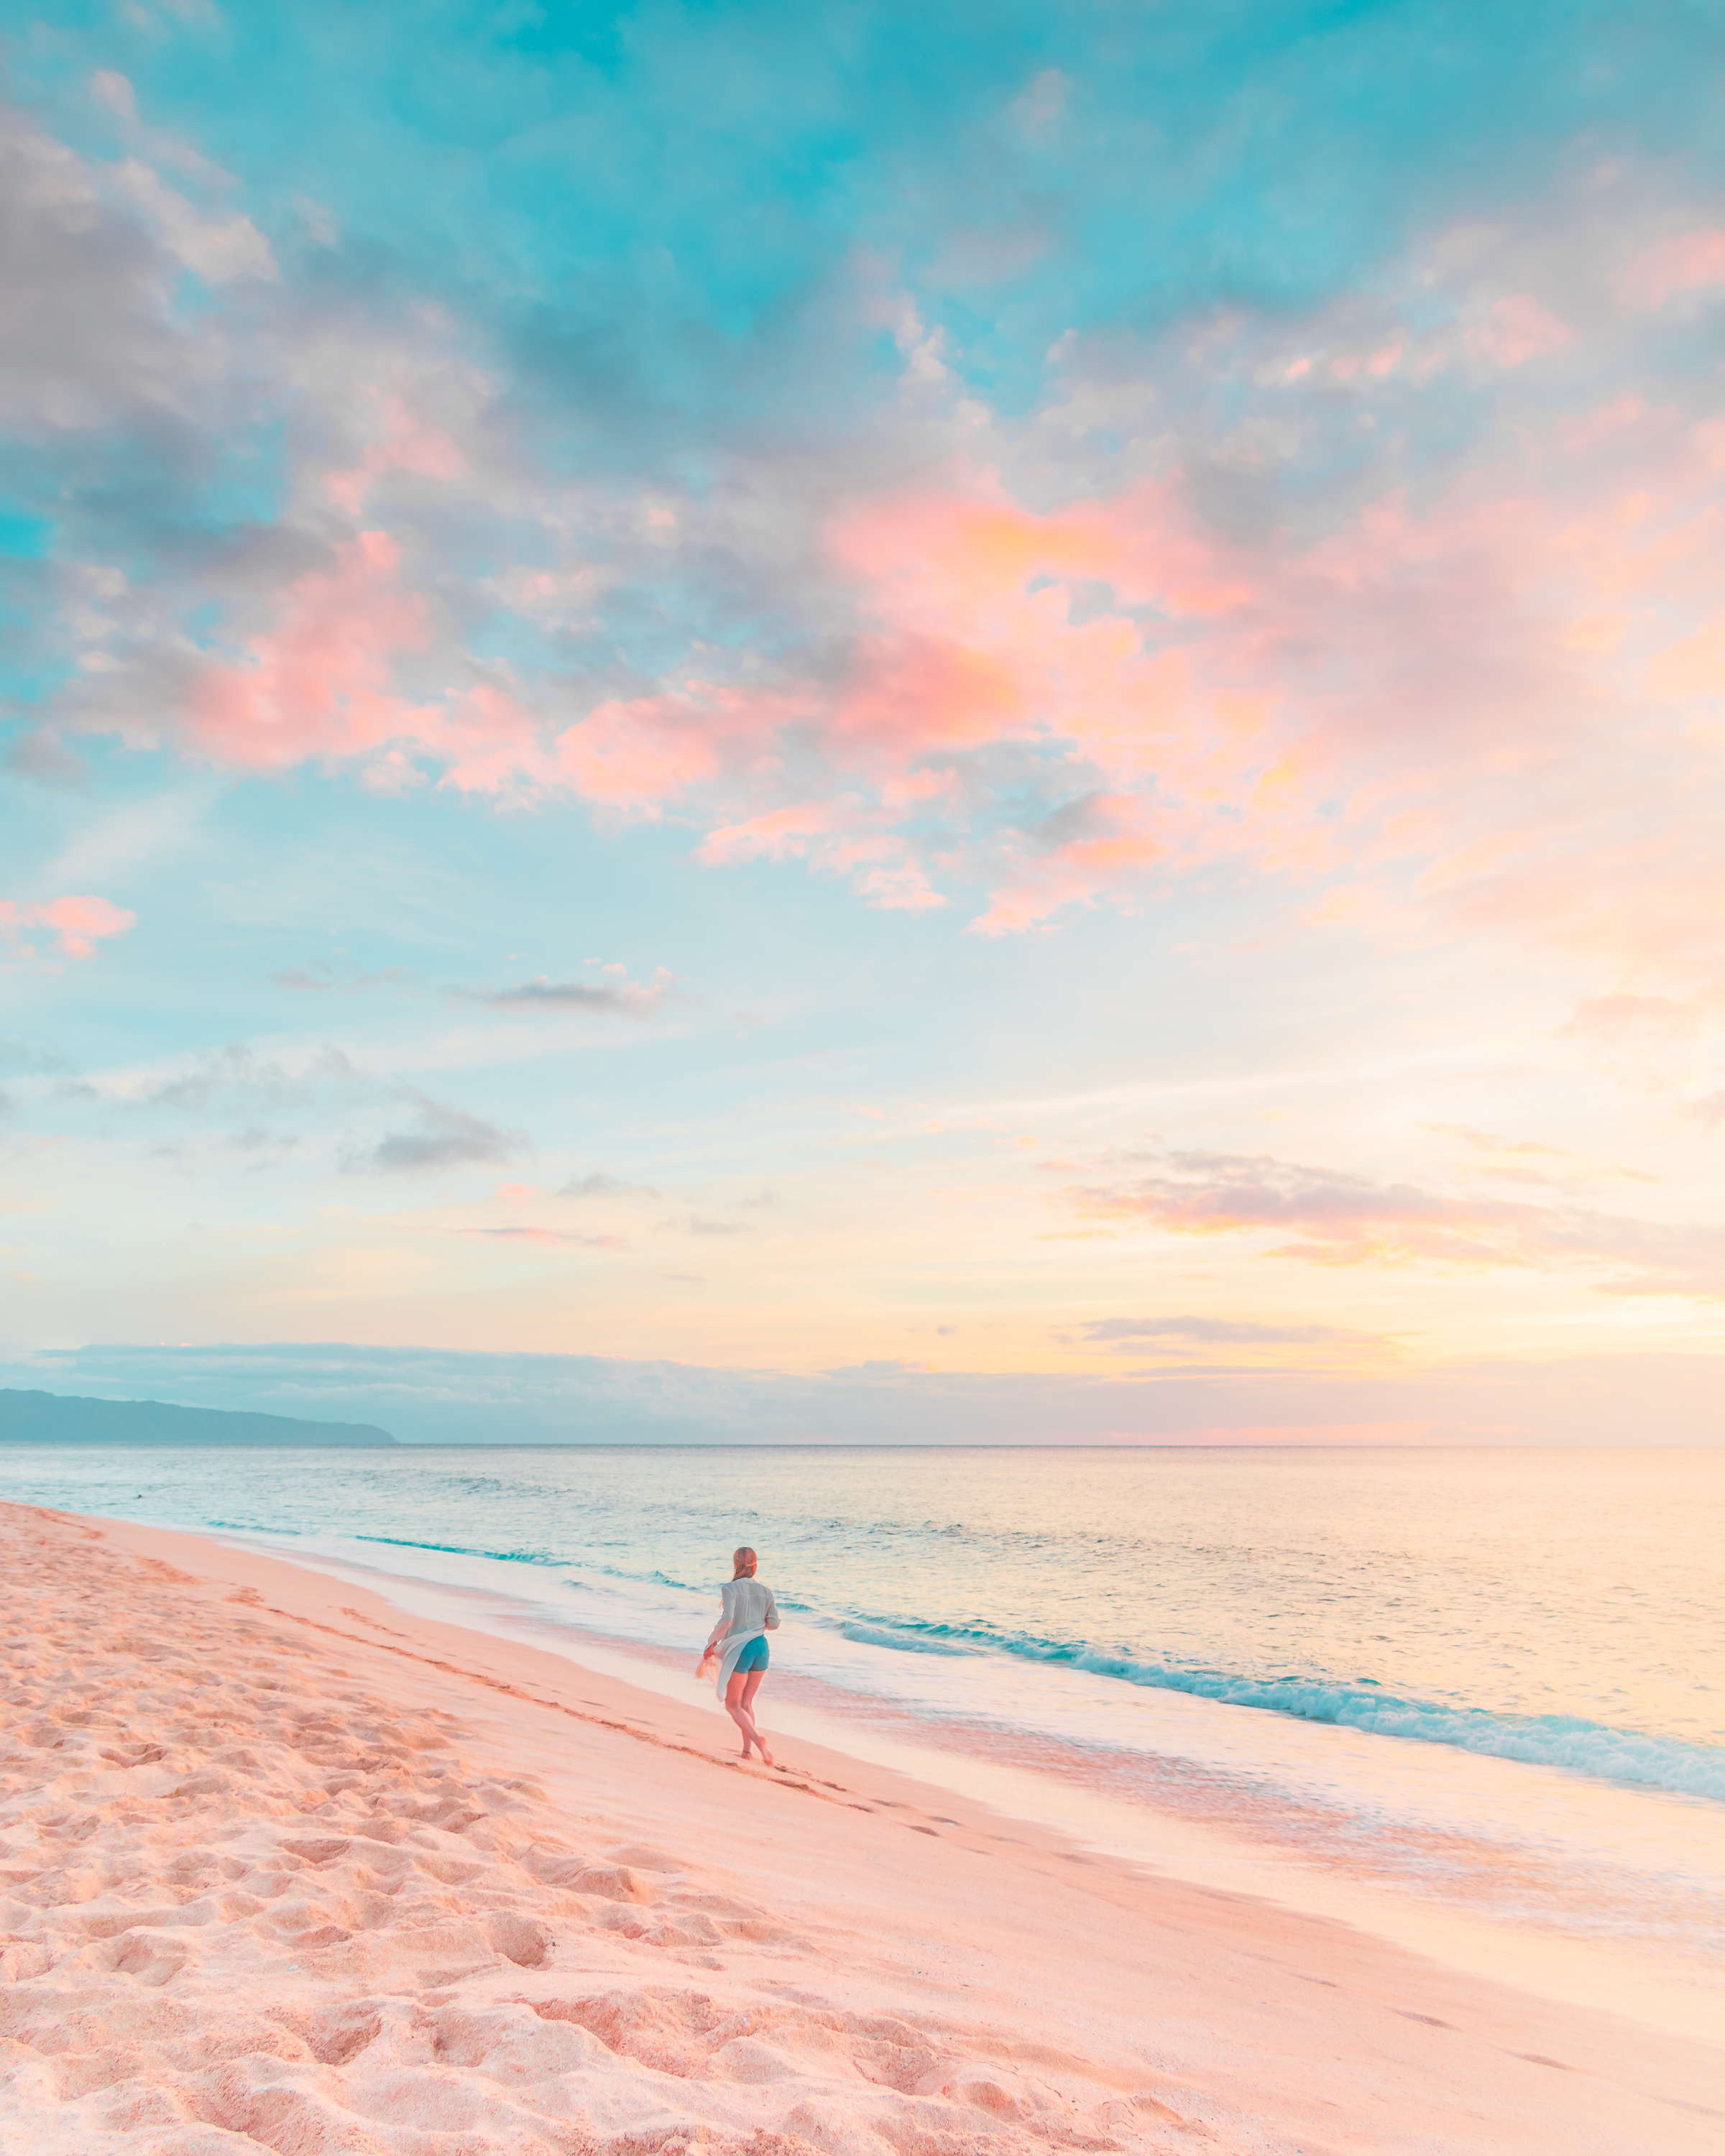 Woman in White Shirt Walking on Beach during Sunset